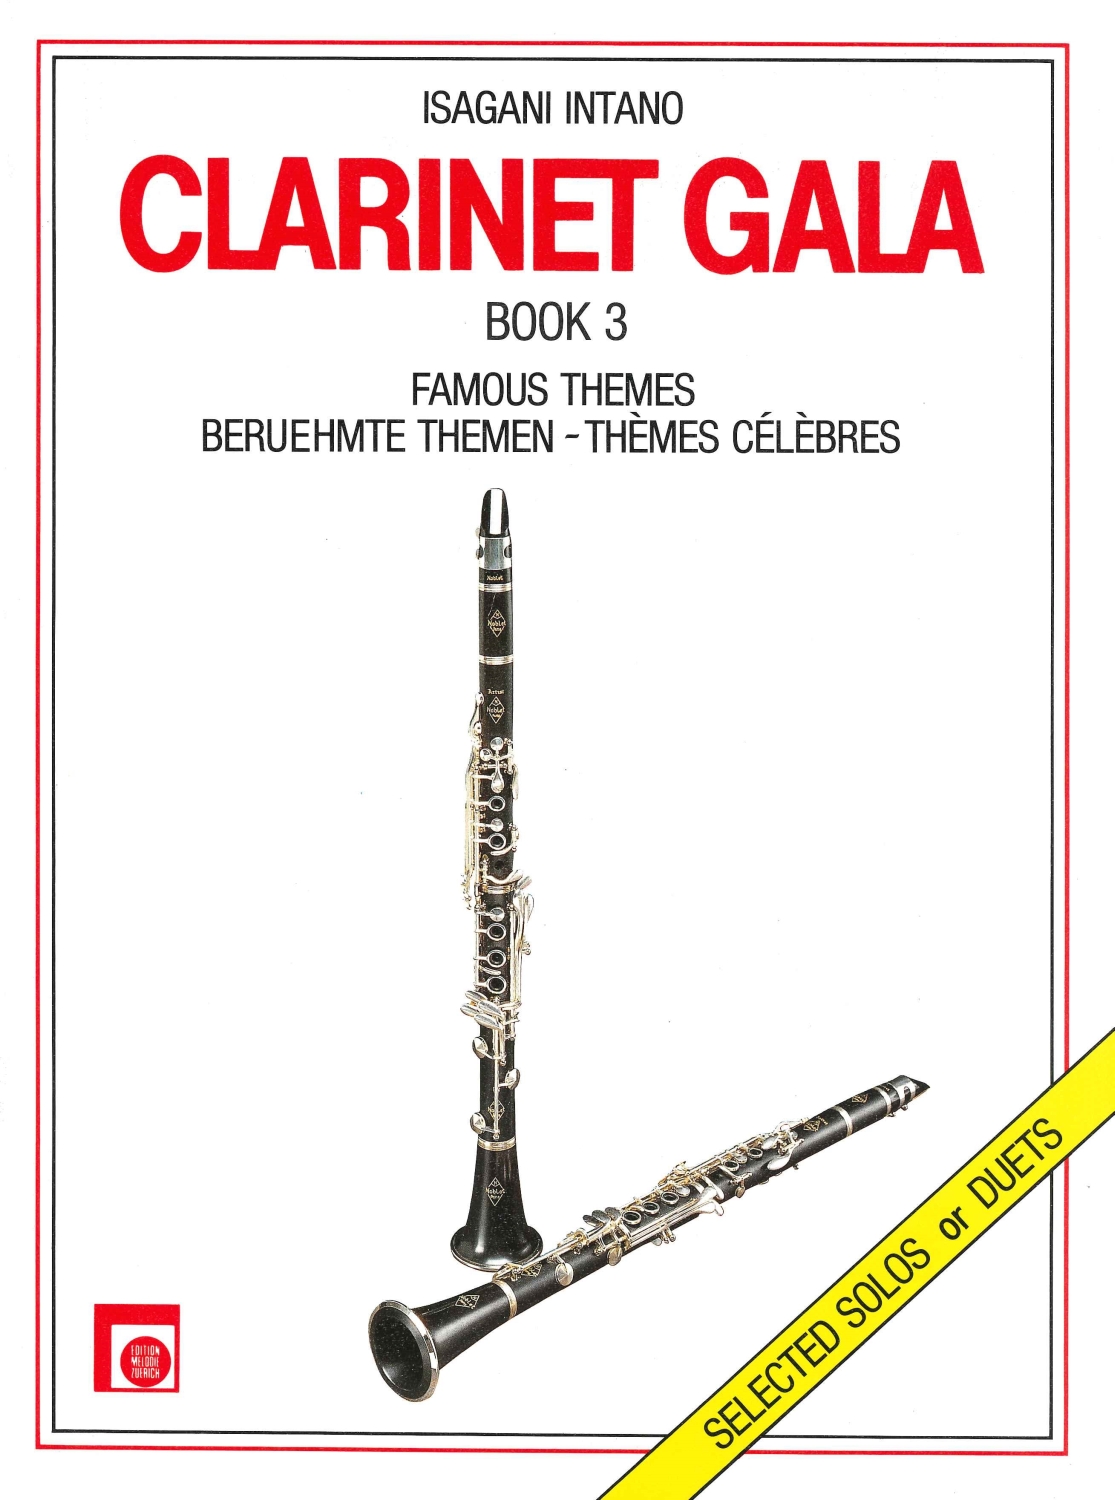 clarinet-gala-vol-3-1-2clr-_0001.JPG